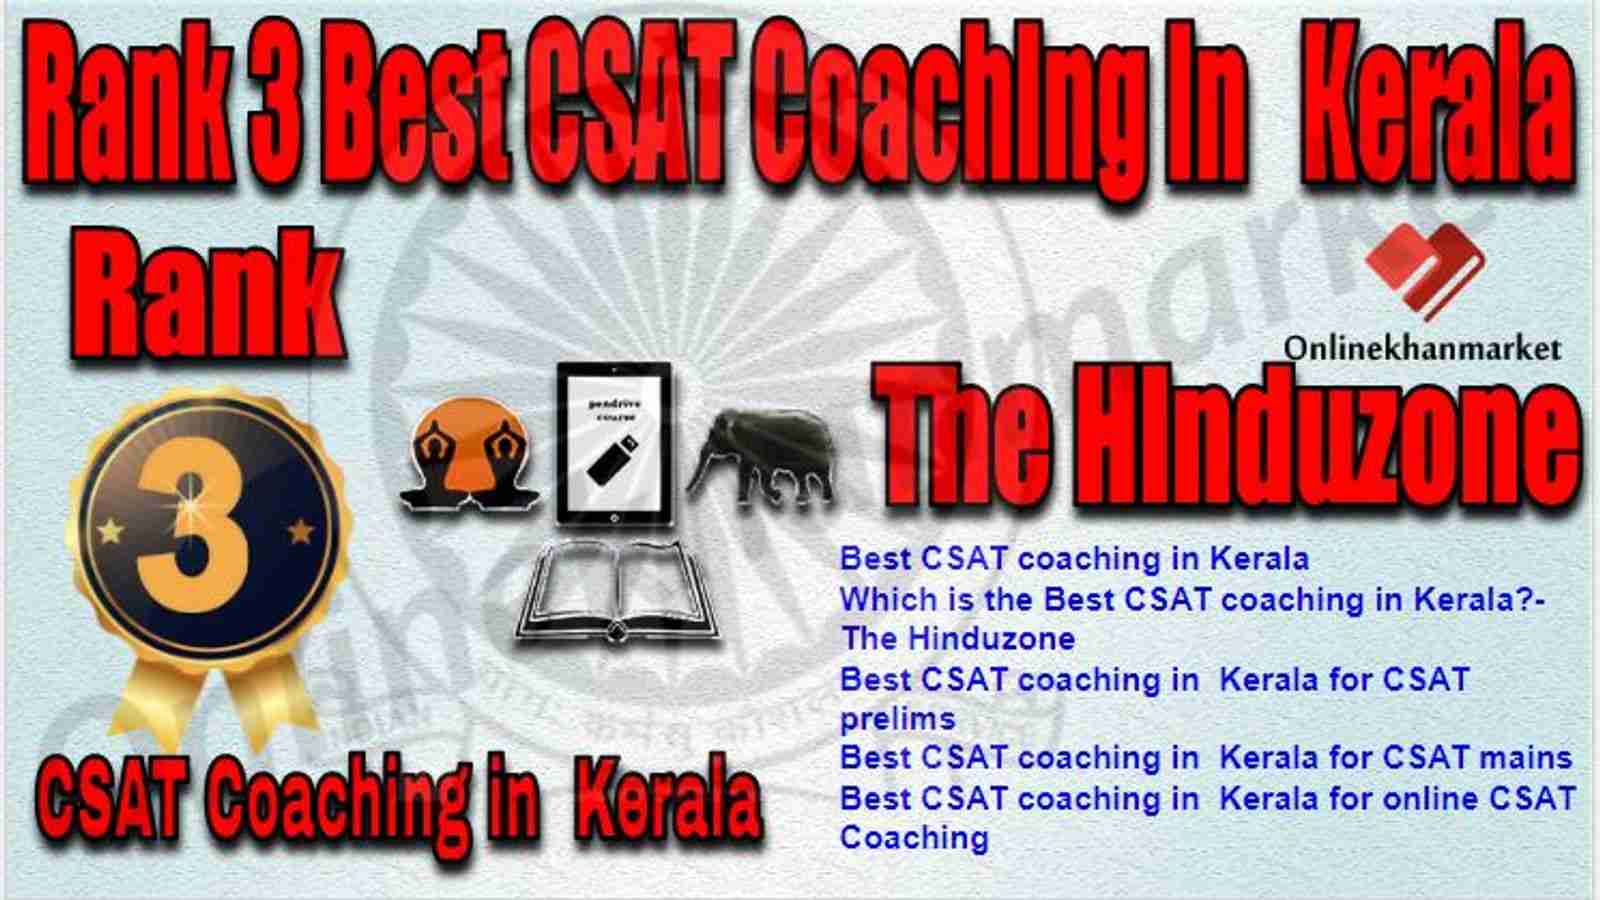 Rank 3 Best CSAT Coaching in kerala